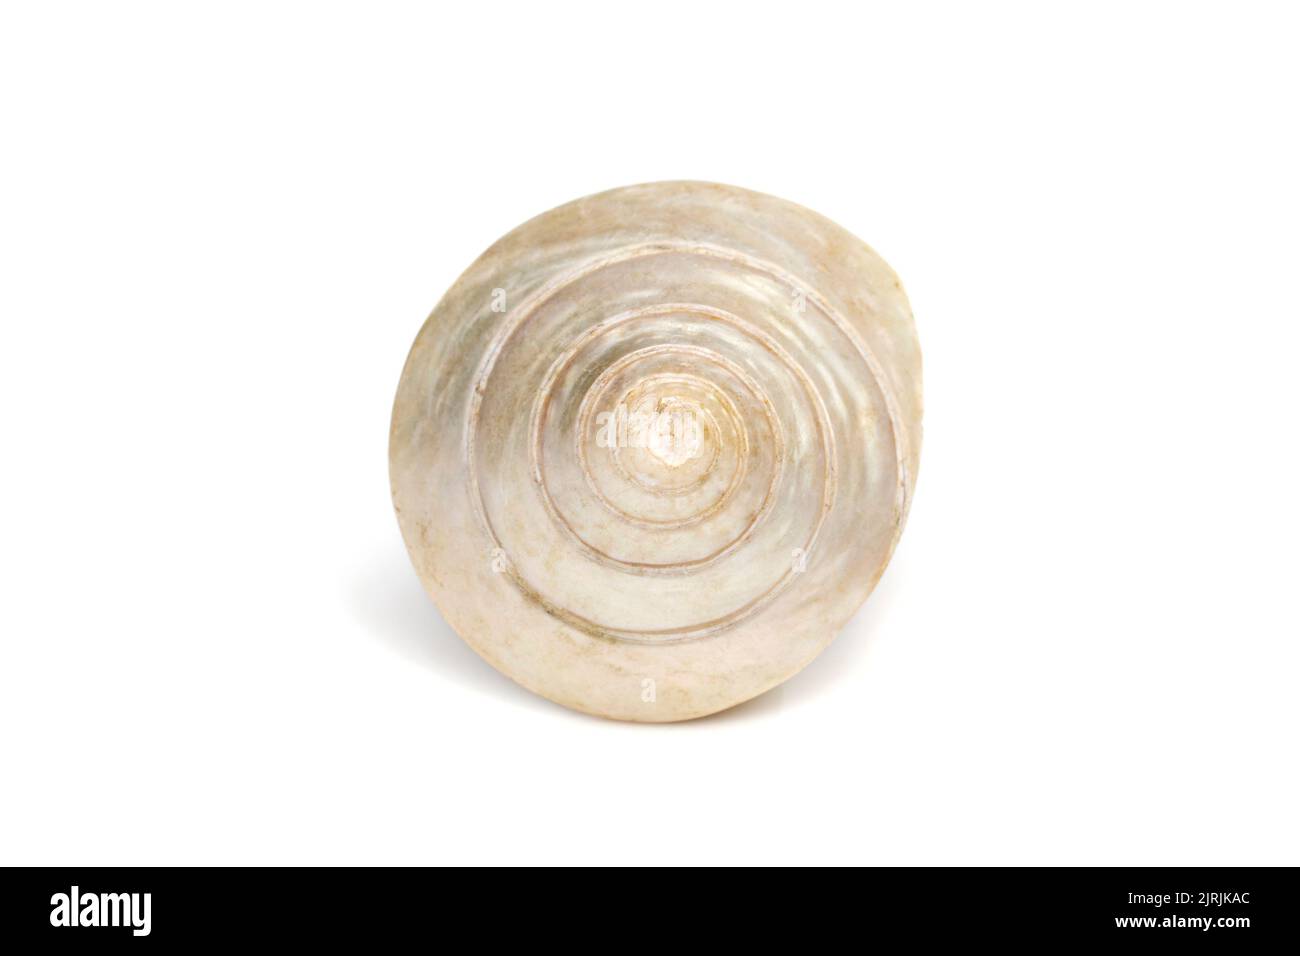 Image of pearl trochus seashells on a white background. Undersea Animals. Sea Shells. Stock Photo